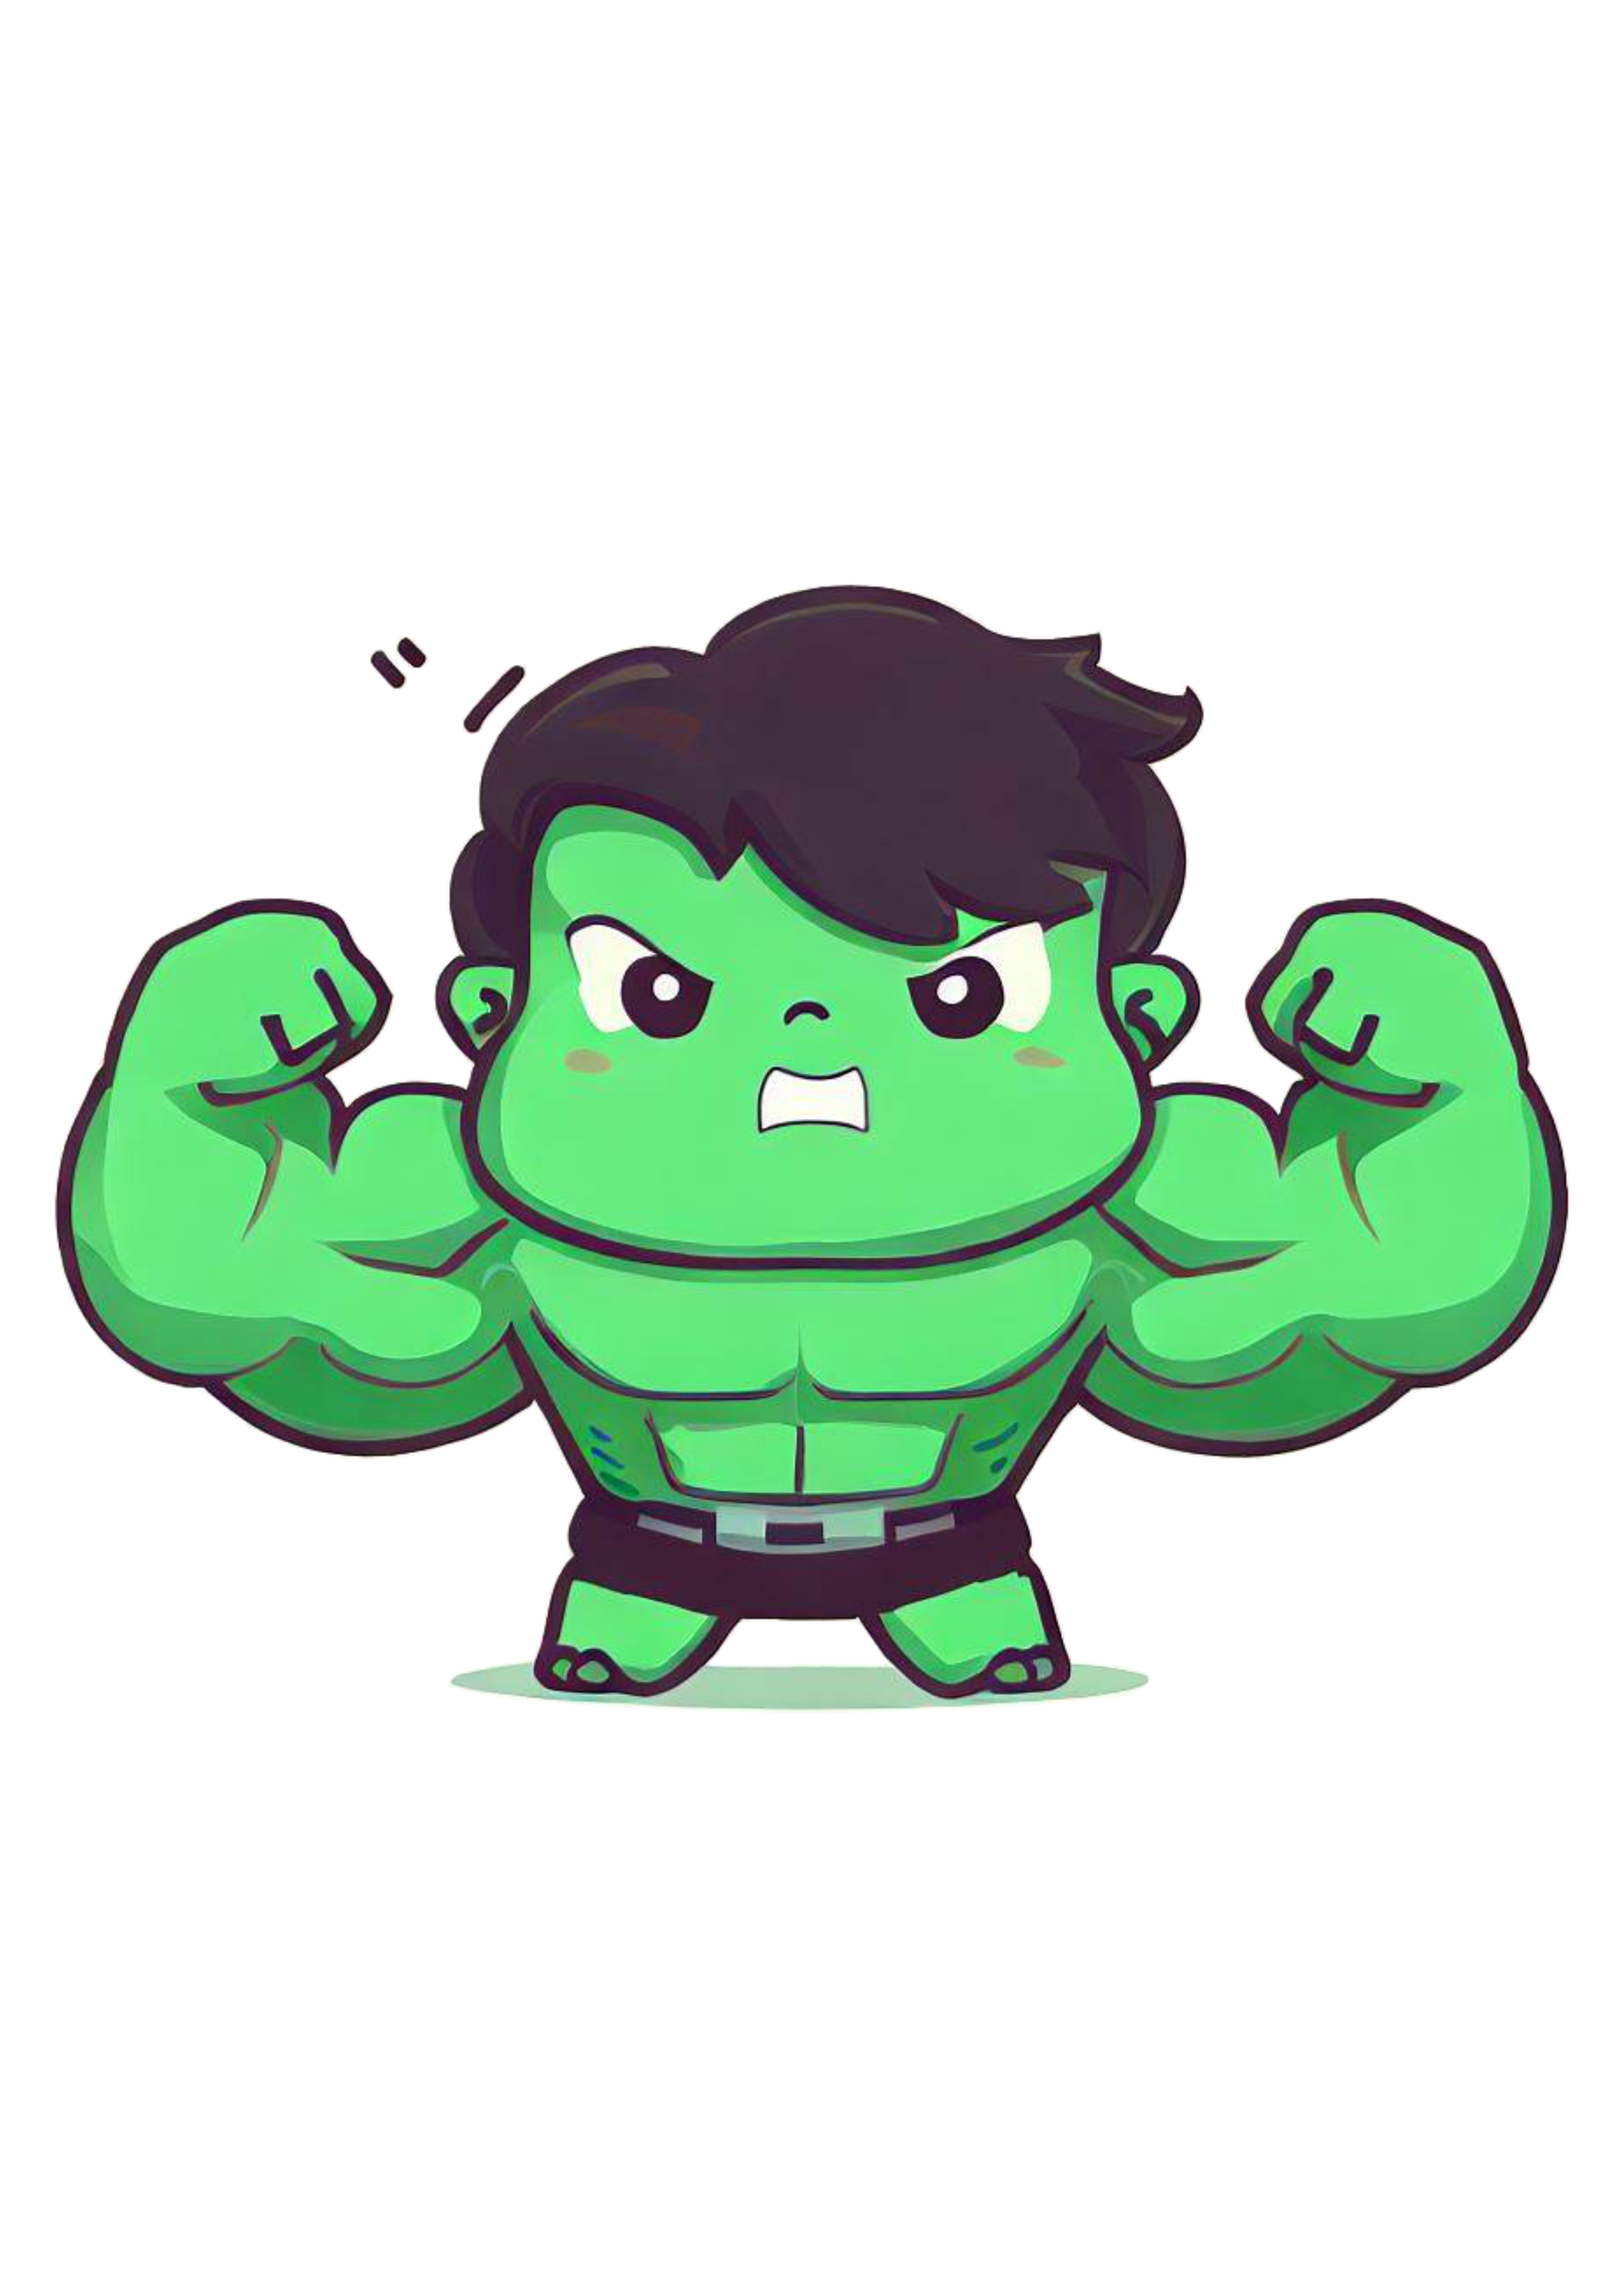 Hulk baby cute fofinho desenho simples super heroi forte infantil bravo quadrinhos marvel studios online png